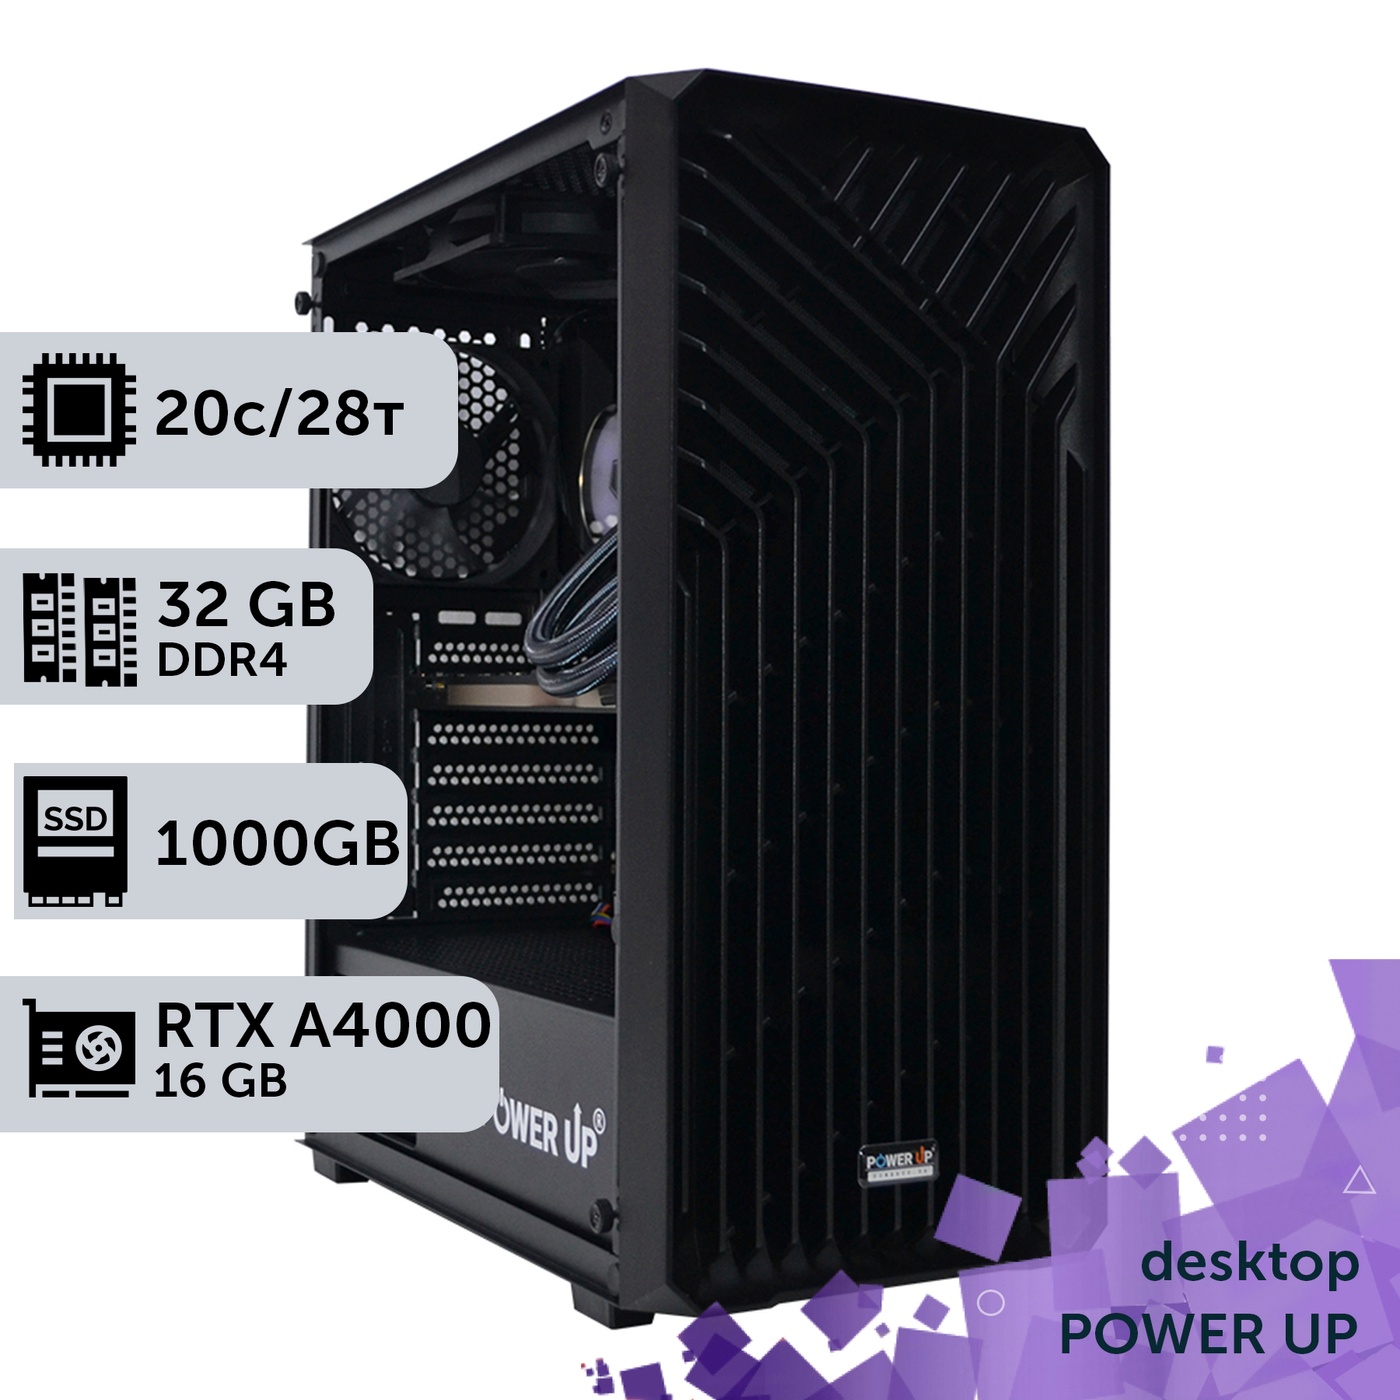 Робоча станція PowerUp Desktop #318 Core i7 14700K/32 GB/SSD 1TB/NVIDIA Quadro RTX A4000 16GB